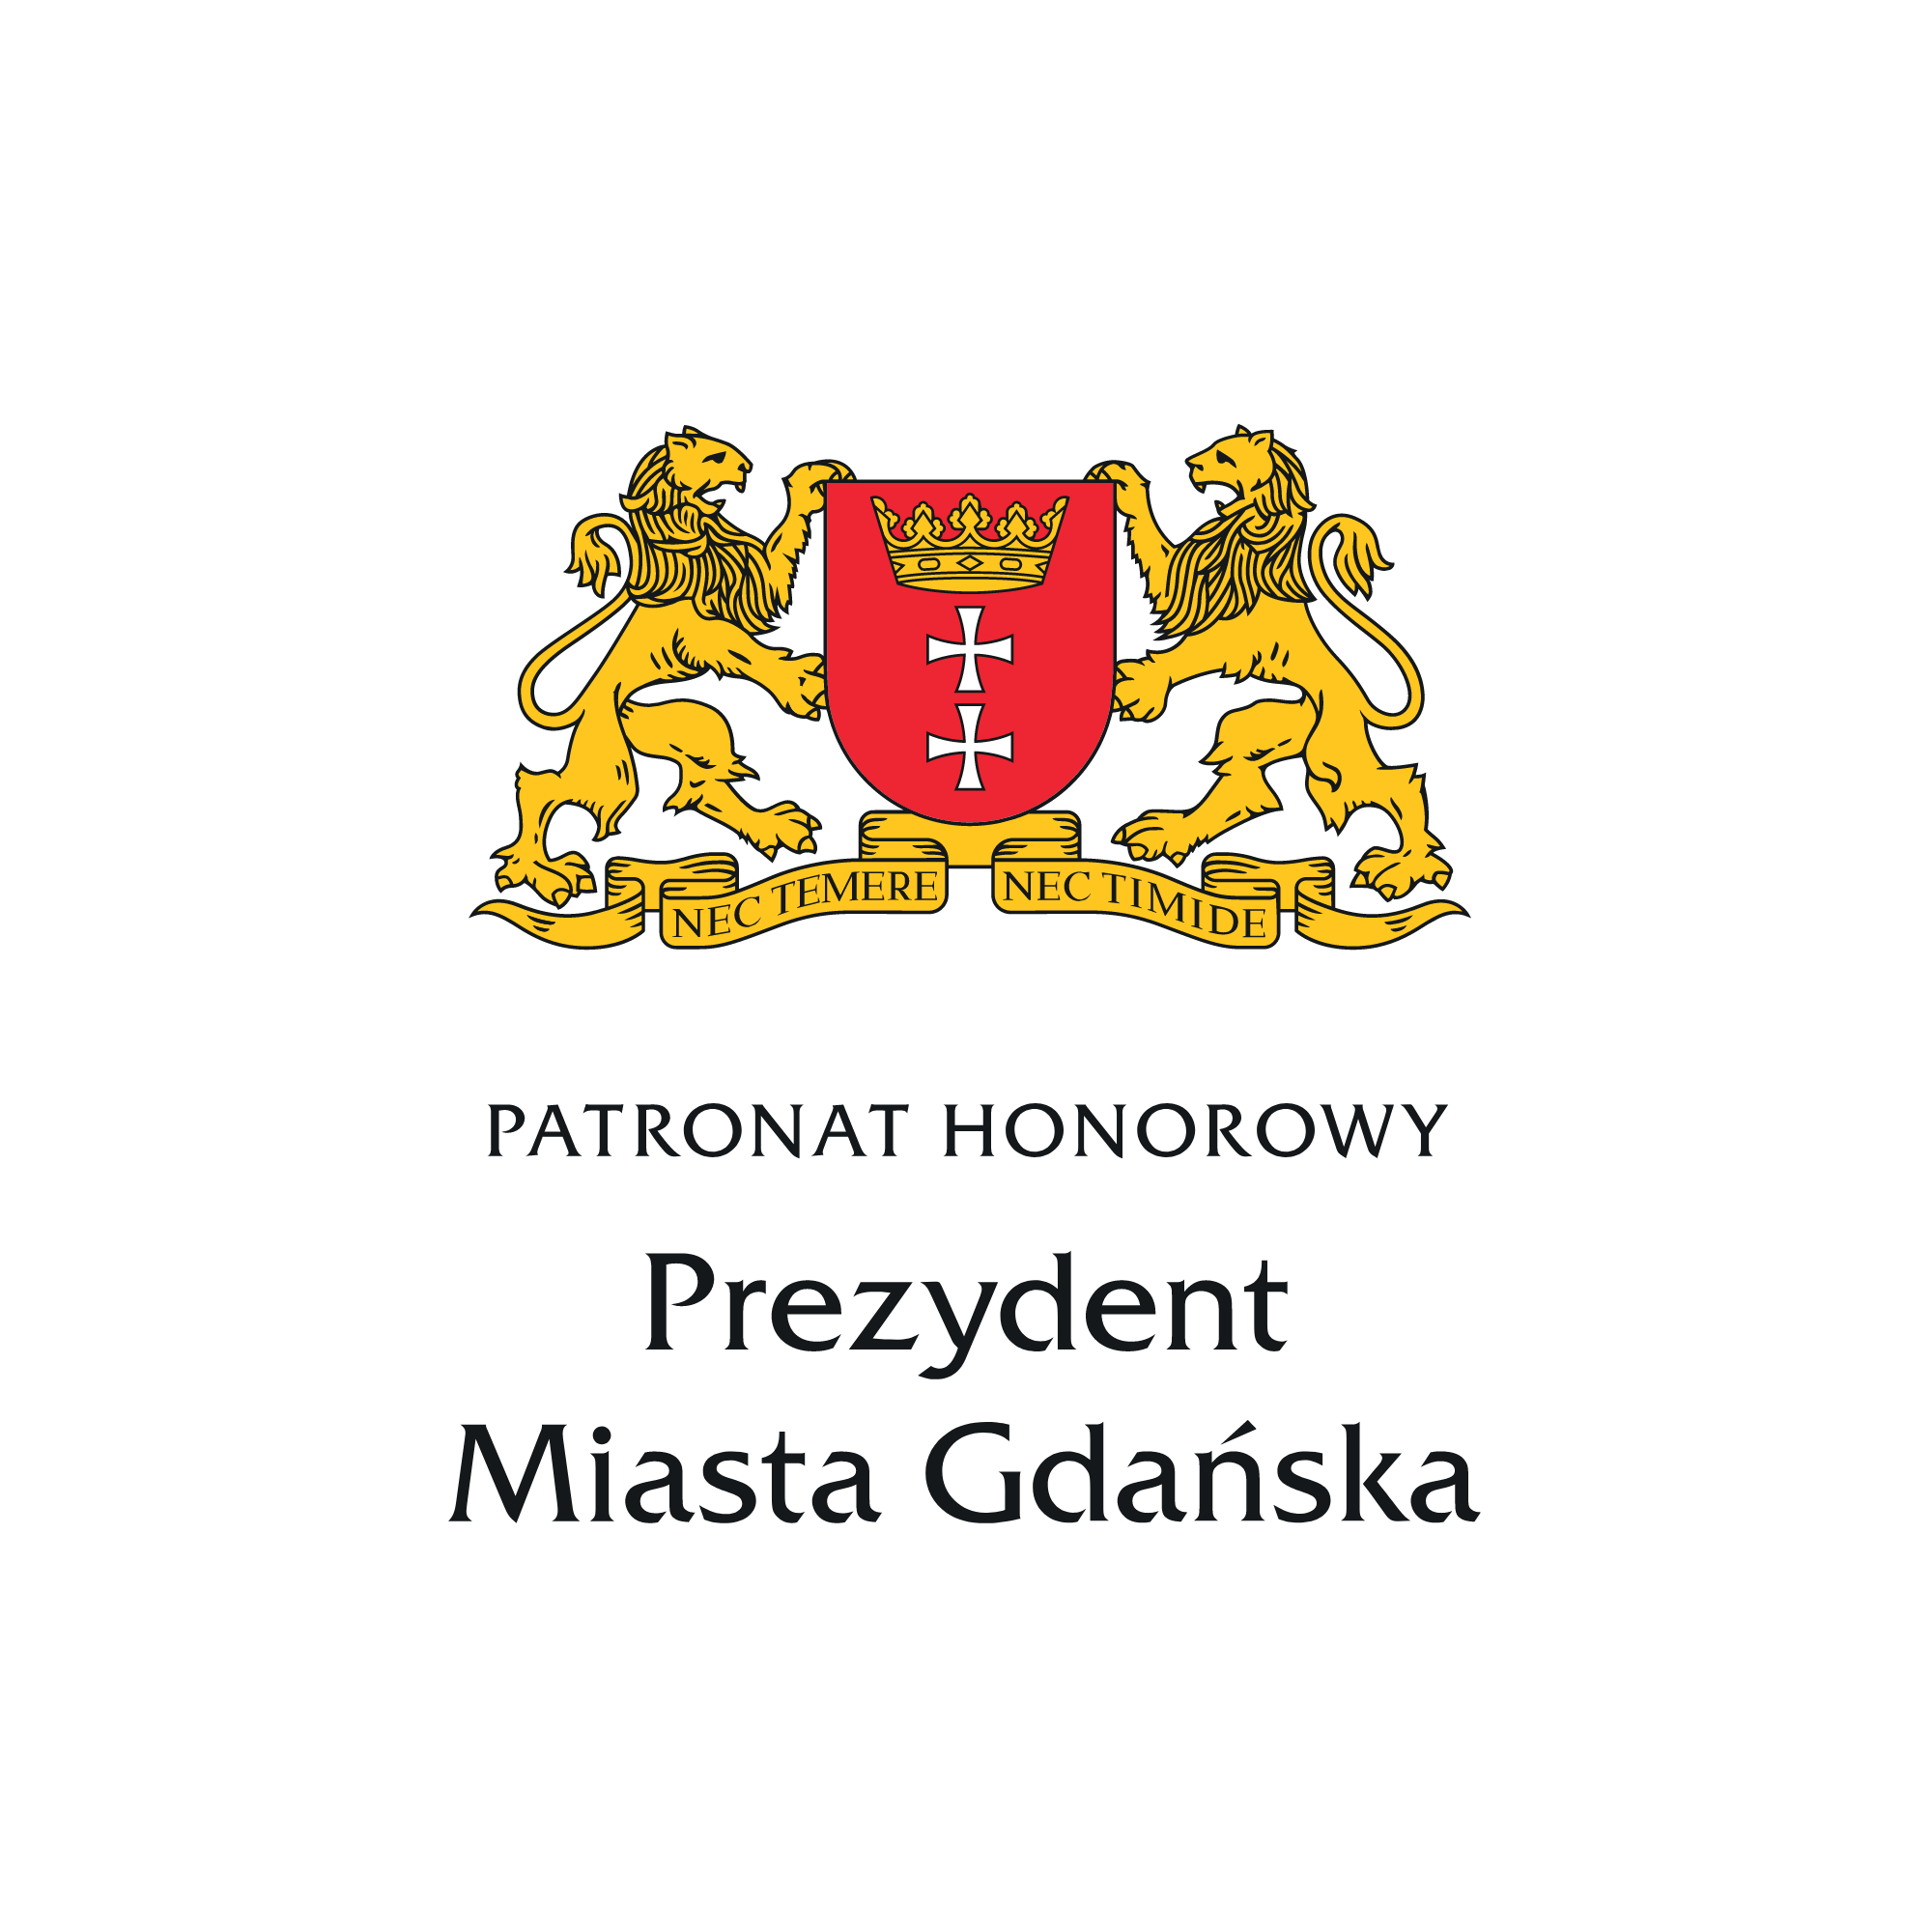 PrezydentMG_patronat_znak_2021_pion_final.pdf